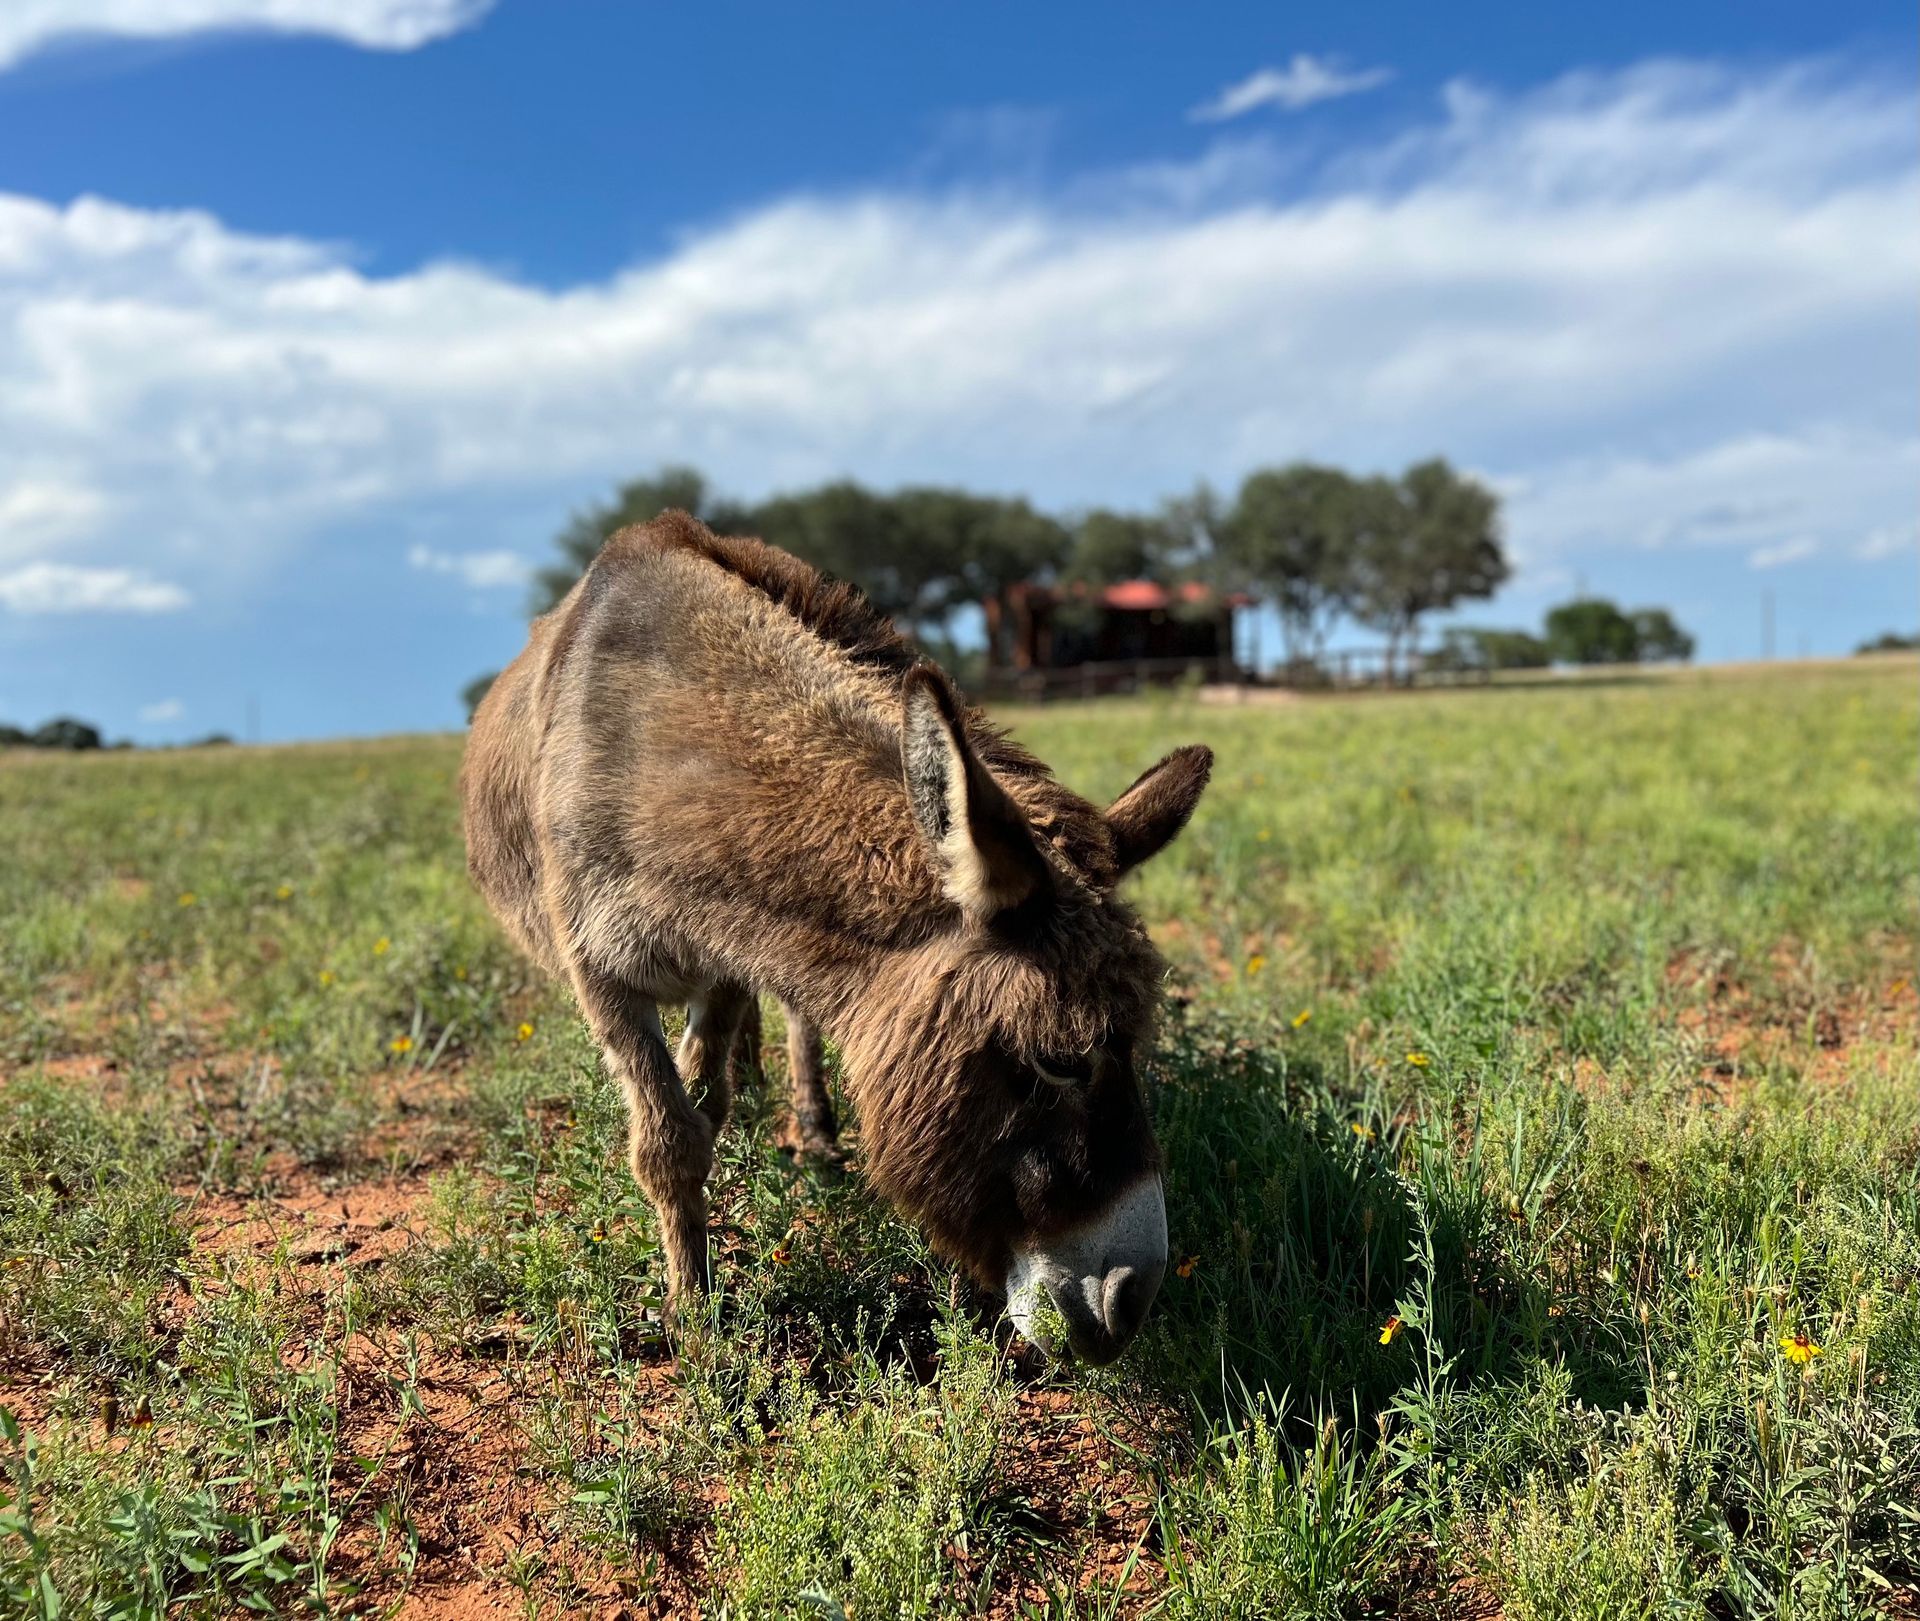 A donkey is grazing in a grassy field.